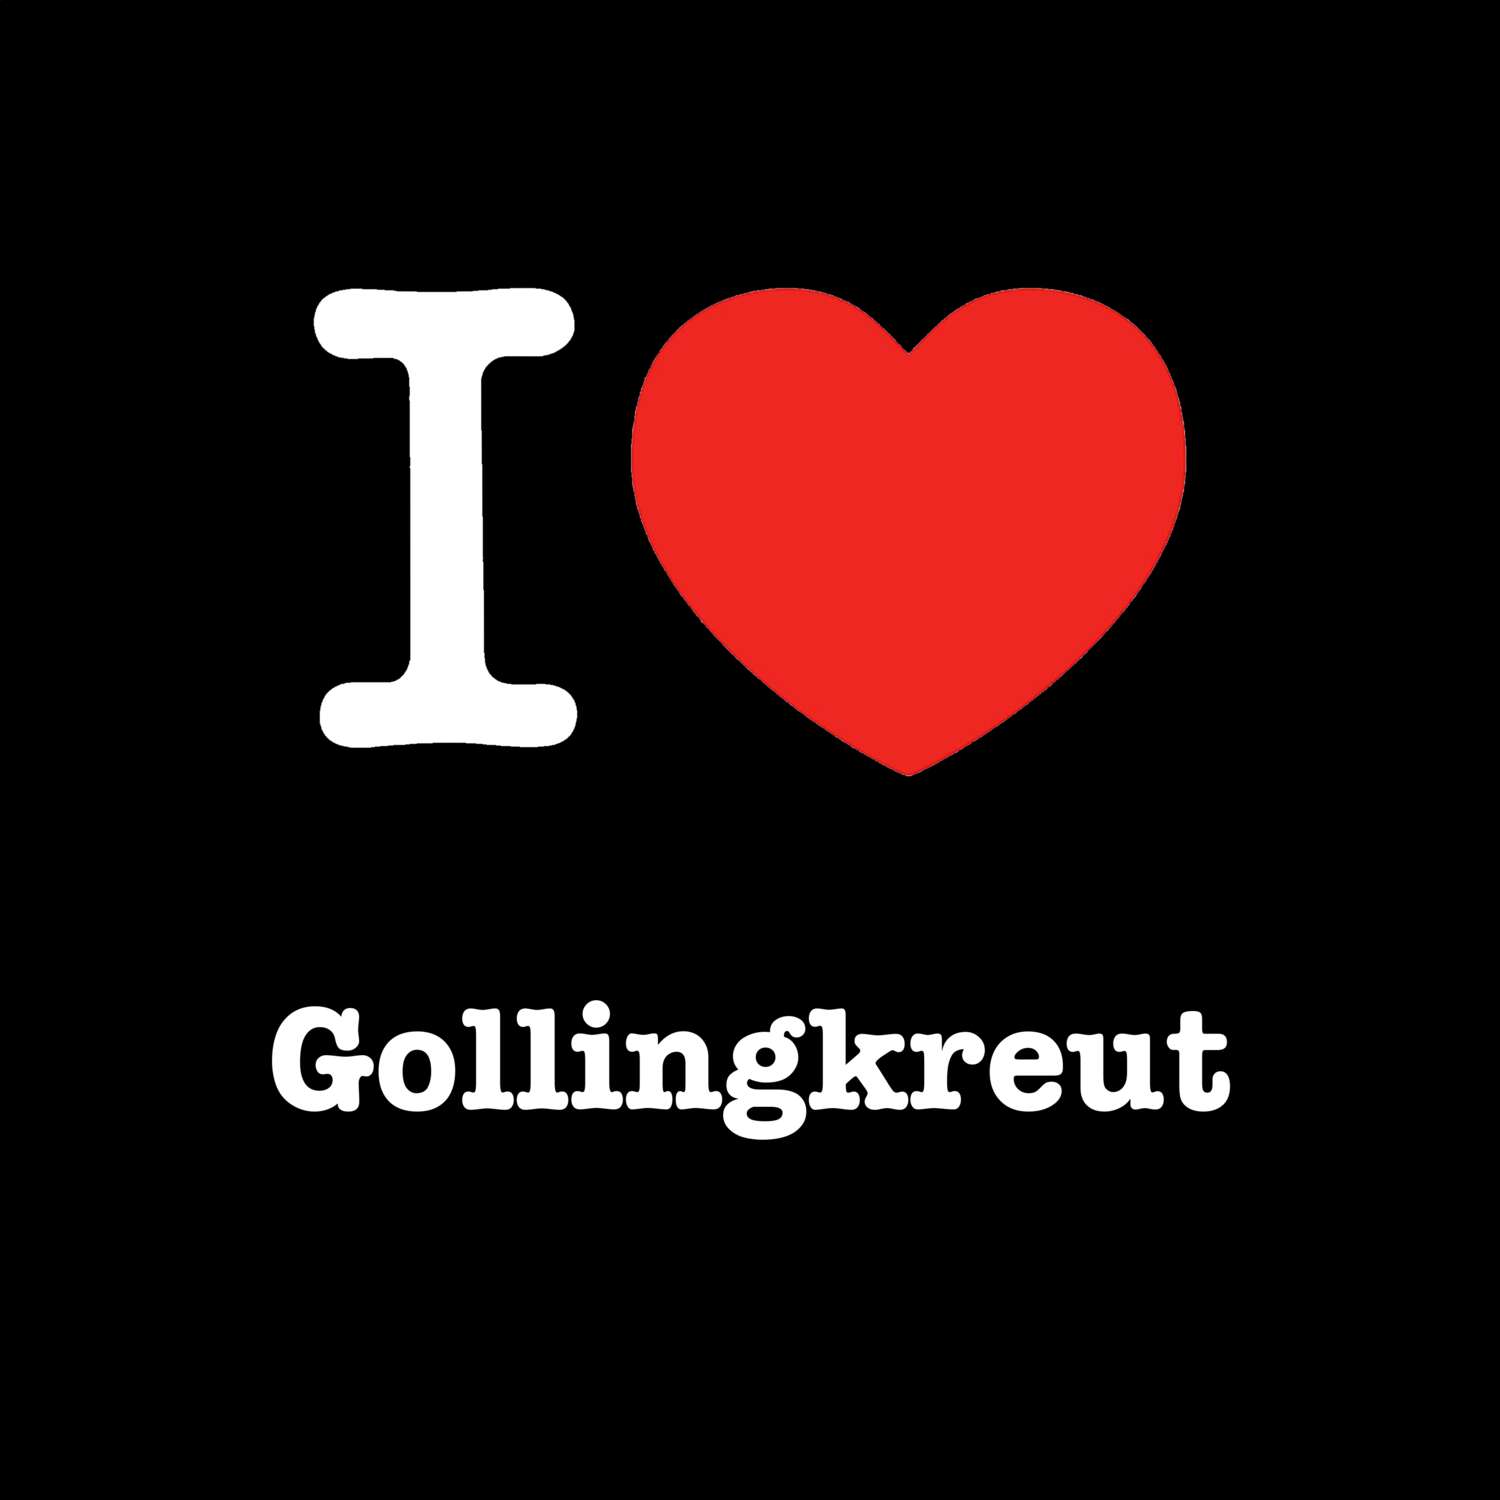 Gollingkreut T-Shirt »I love«